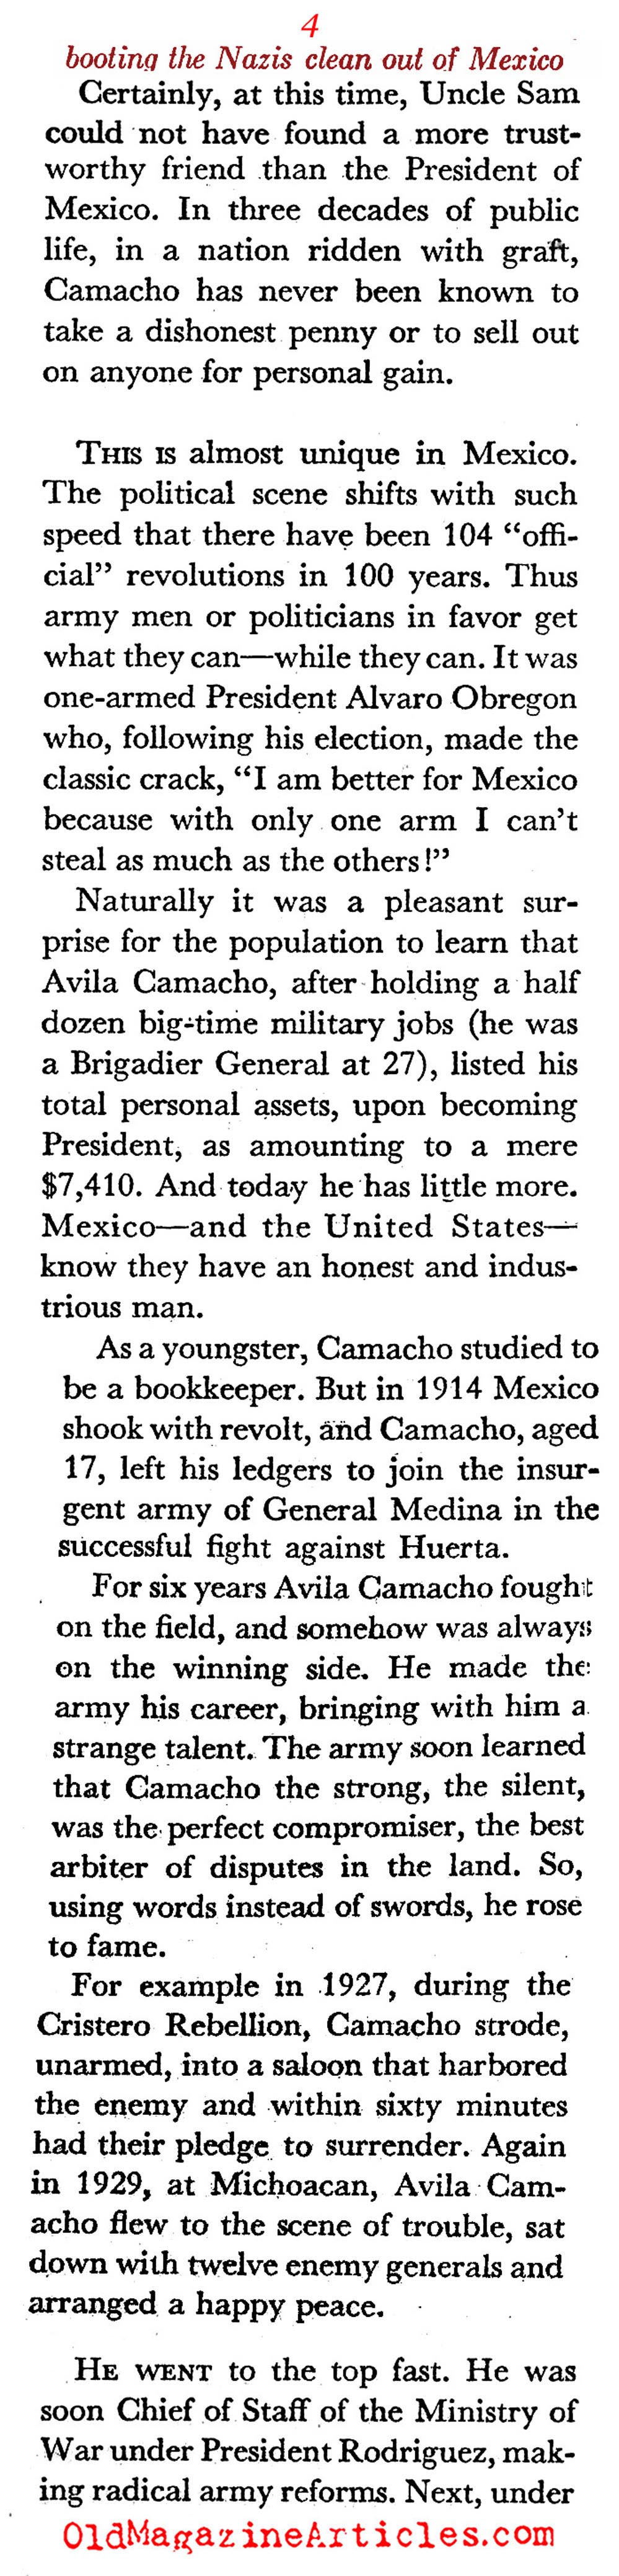 Mexico: American Ally (Coronet Magazine, 1943)